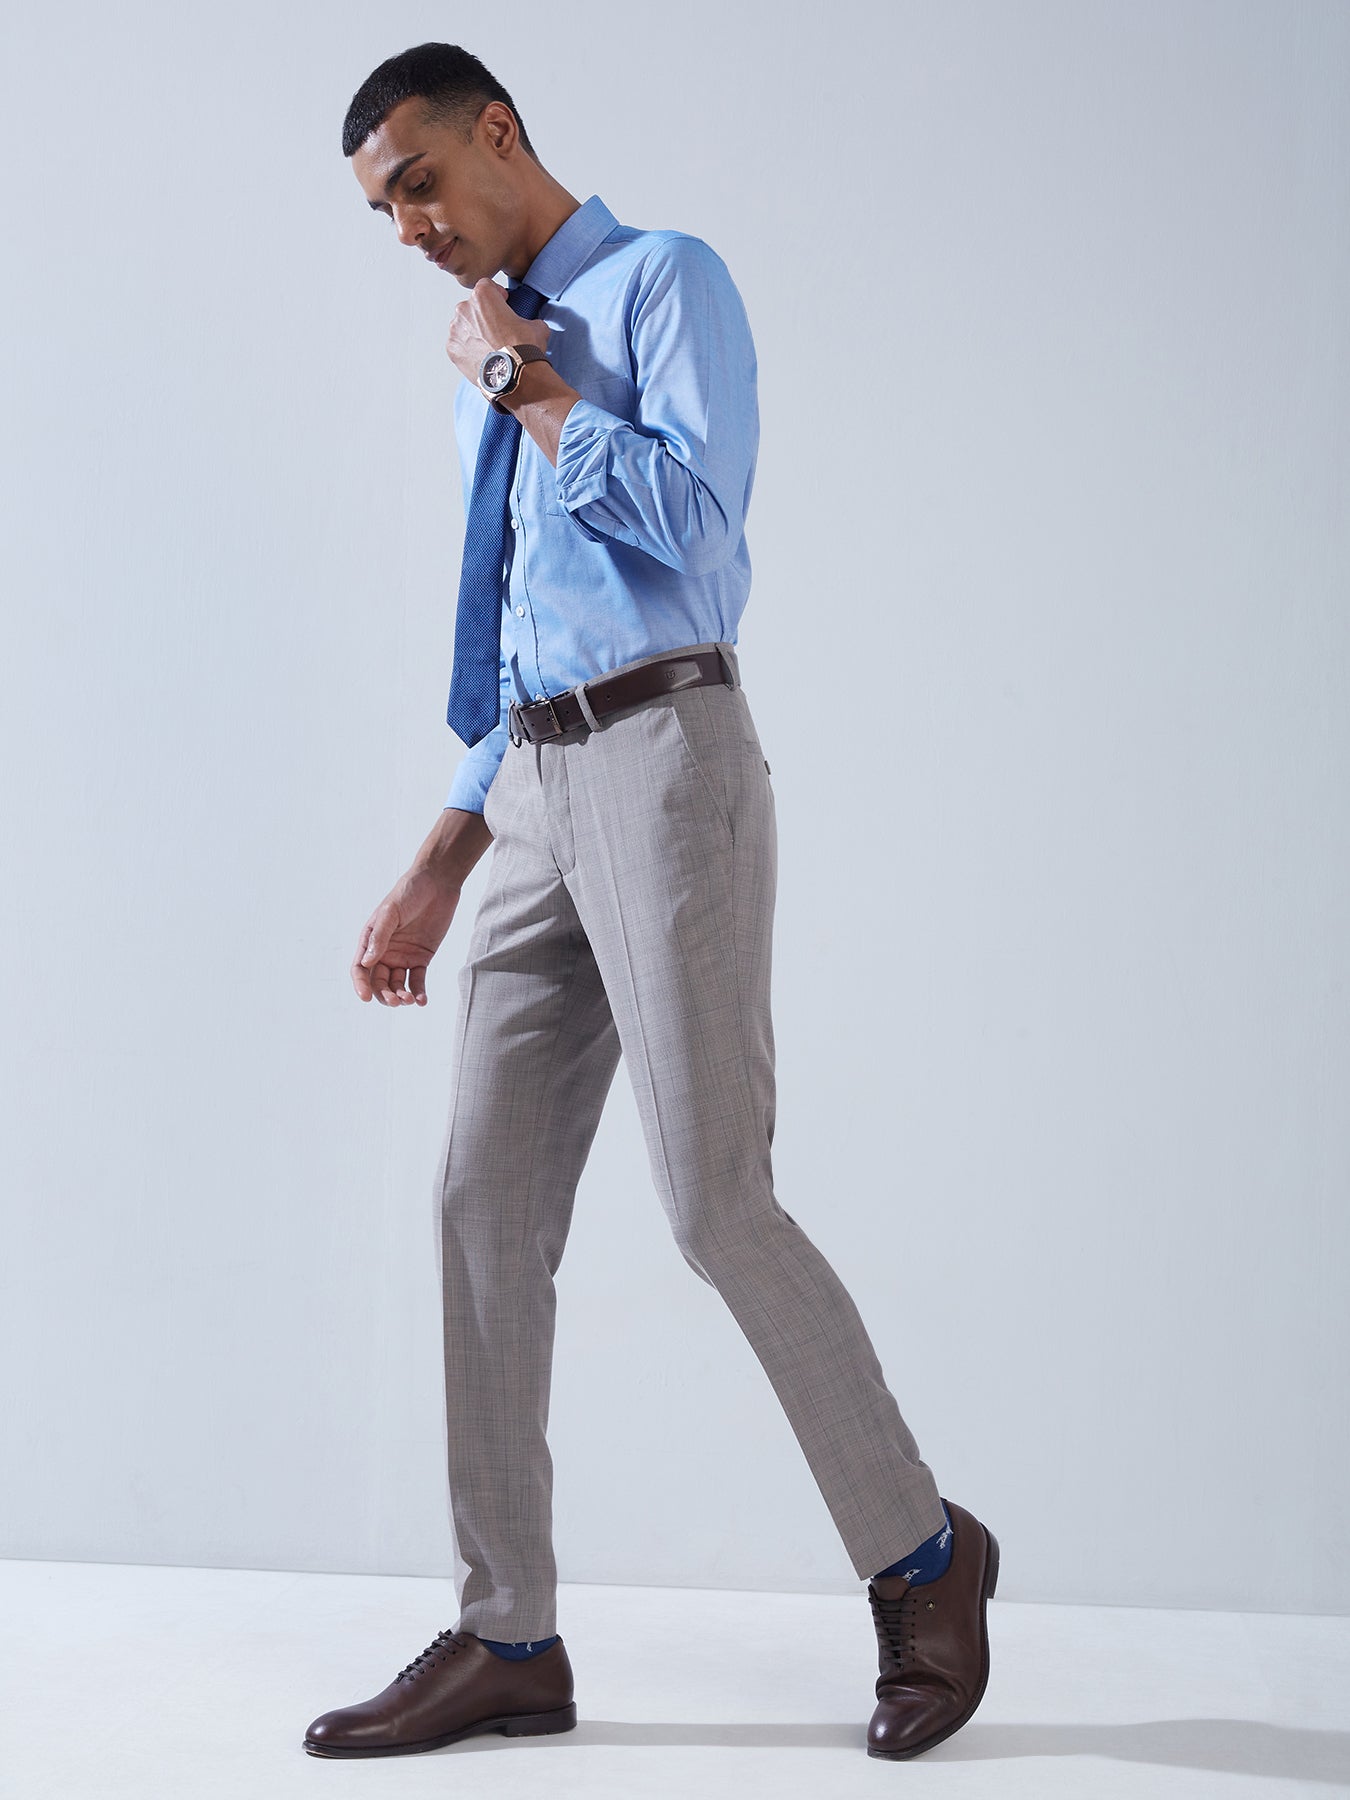 100% Cotton Light Blue SLIM FIT Full Sleeve Formal Mens Shirts